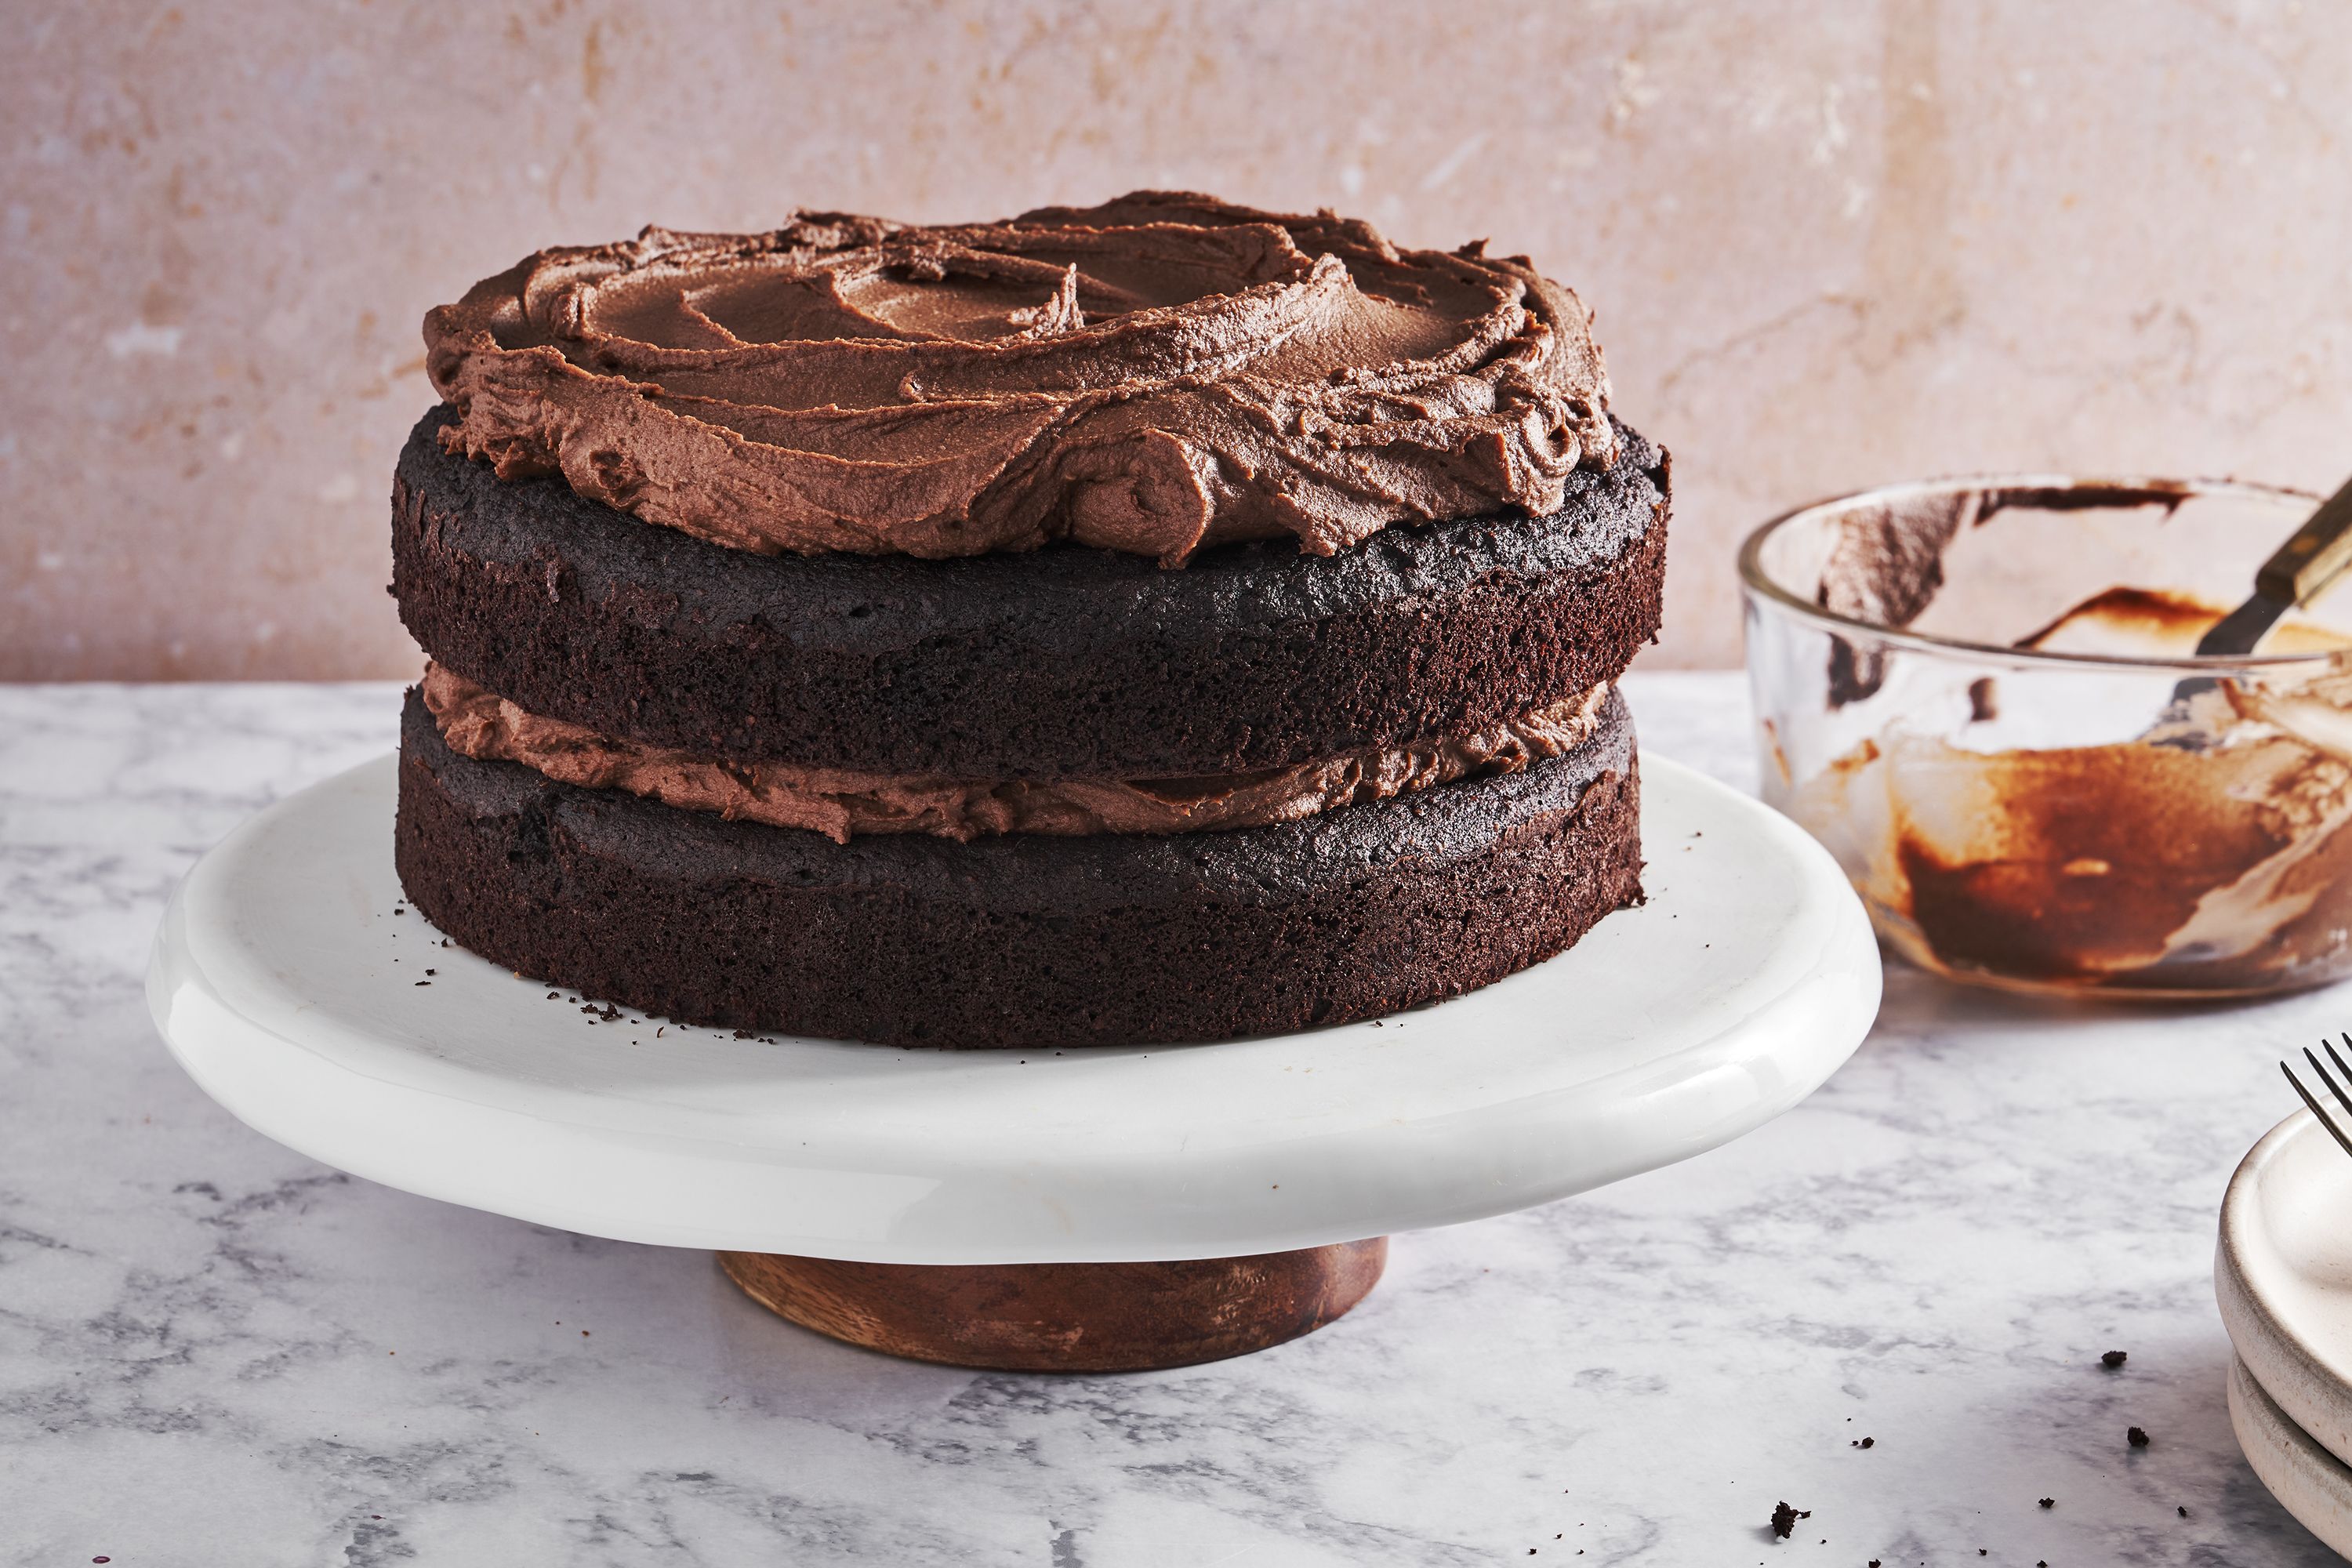 Best Keto Chocolate Cake Recipe - How To Make Keto Chocolate Cake Delish.com